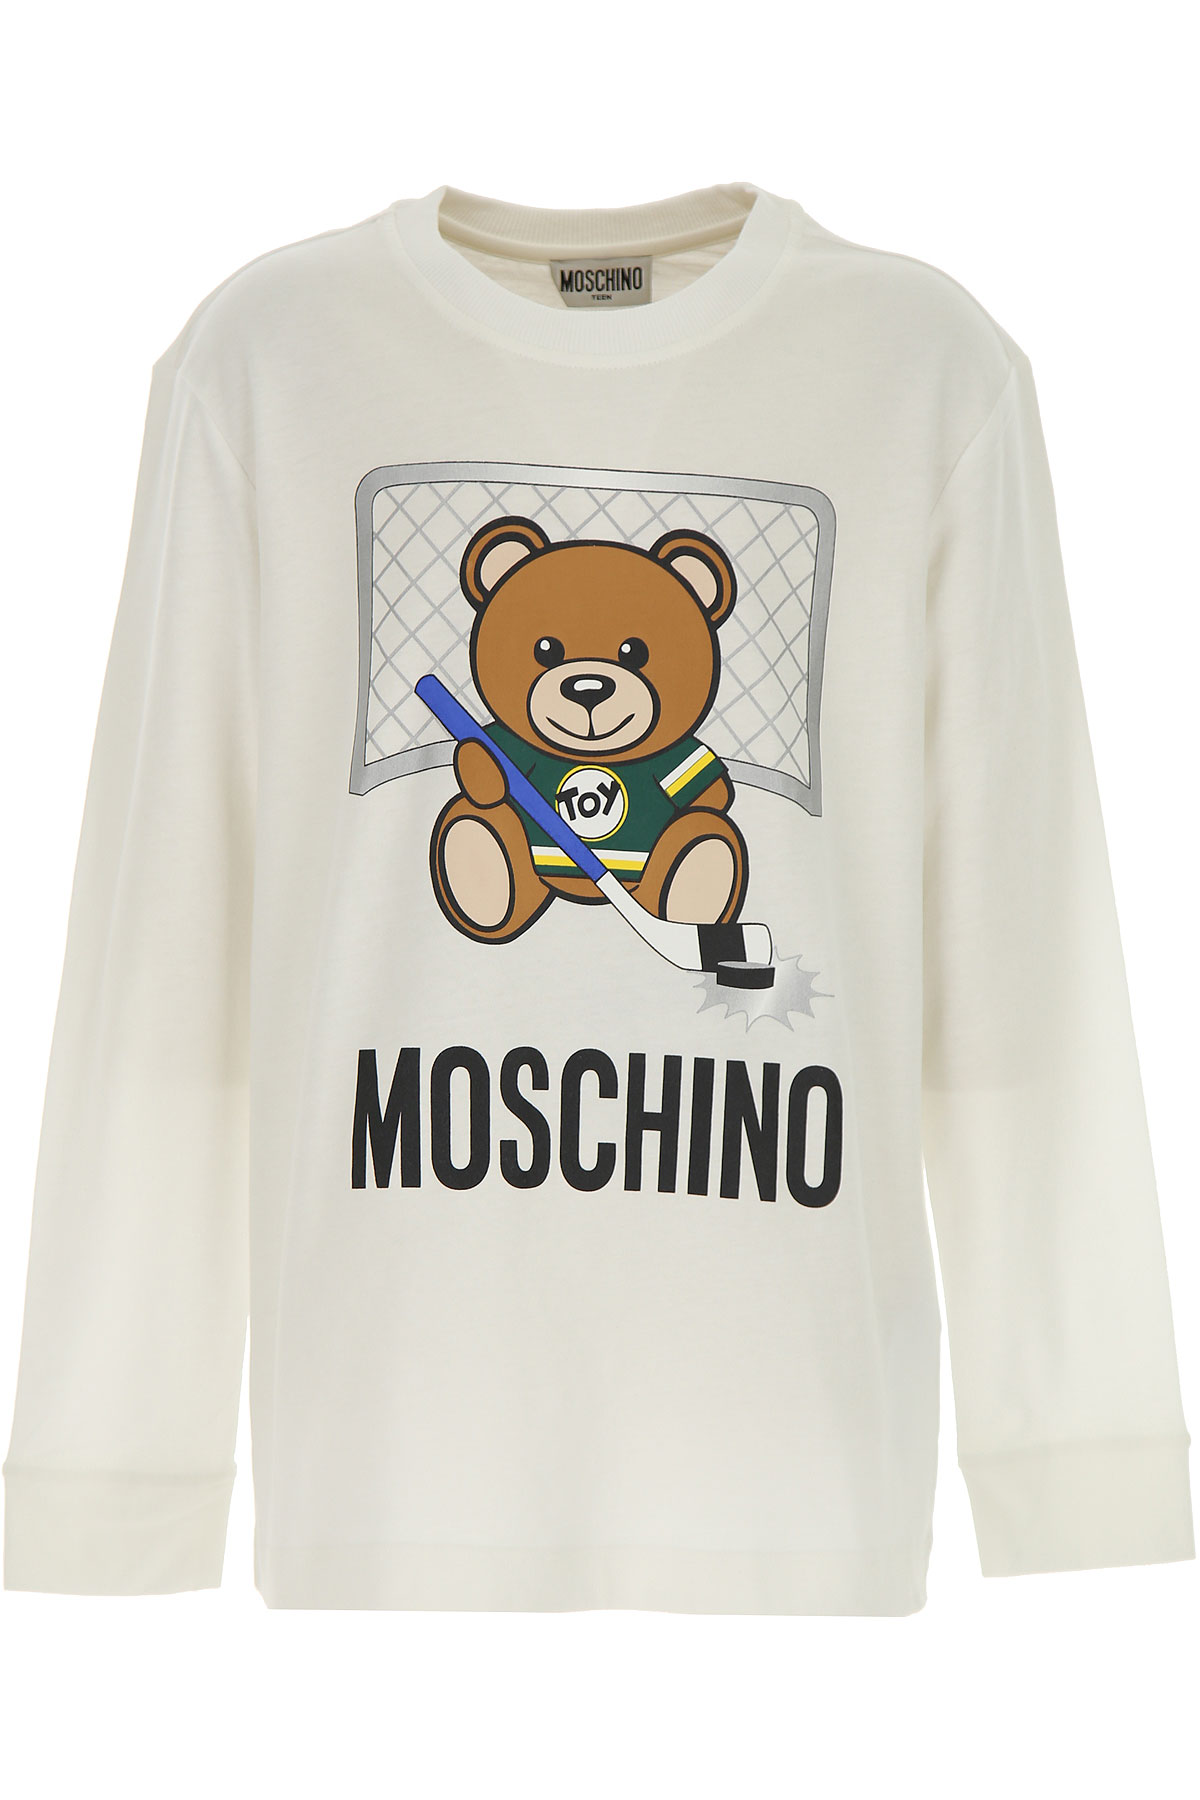 Moschino Kinder T-Shirt für Jungen Günstig im Sale, Weiss, Baumwolle, 2017, 10Y 12Y 14Y 4Y 5Y 6Y